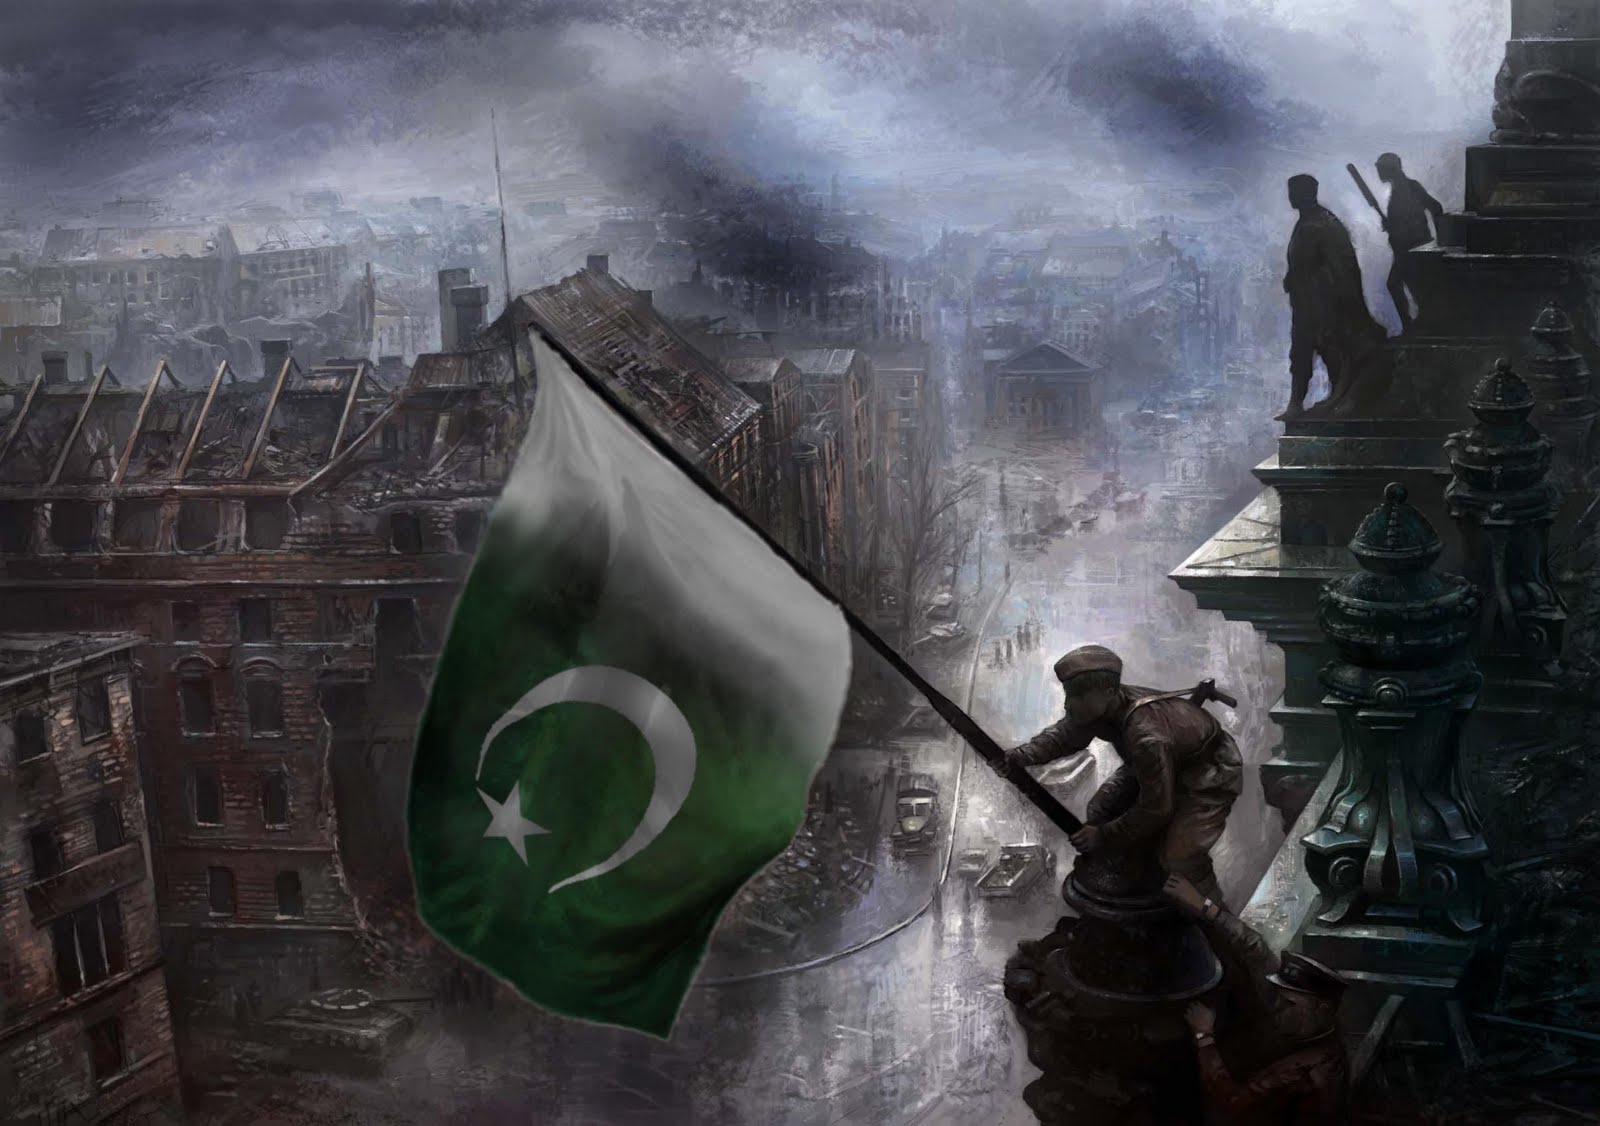 http://1.bp.blogspot.com/--Lr1sftmz8M/TdWMPJ2uZmI/AAAAAAAABEc/jvmrx4-GAbI/s1600/Wallpapers+Flag+of+Pakistan+Pakistani+Flag+Graphics+%25282%2529.jpg